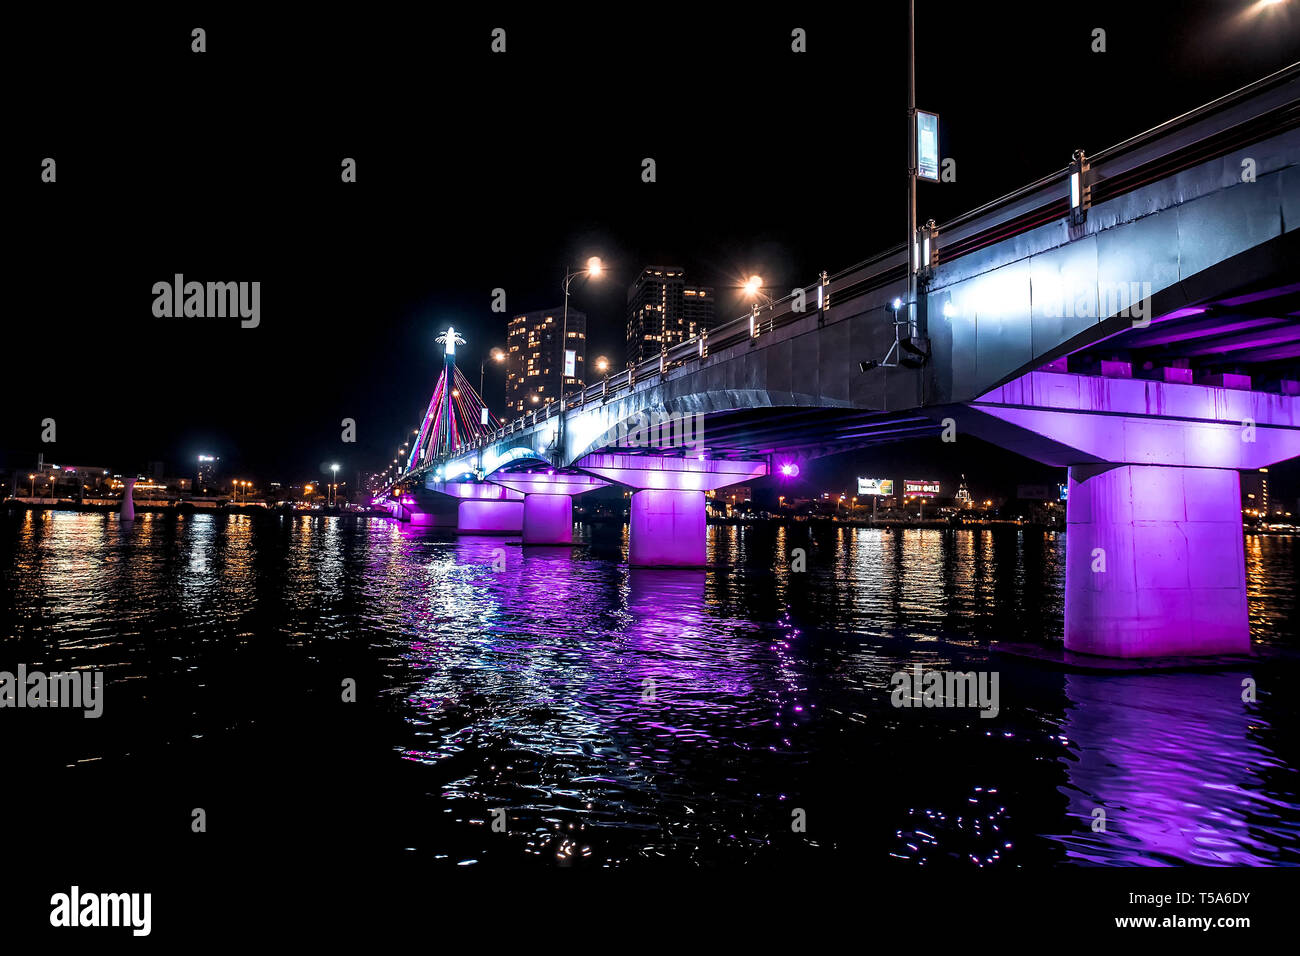 Han River Bridge and the Thuan Phuoc Bridge at night flamboyance on the Han River. Night view of Danang. Vietnam Stock Photo